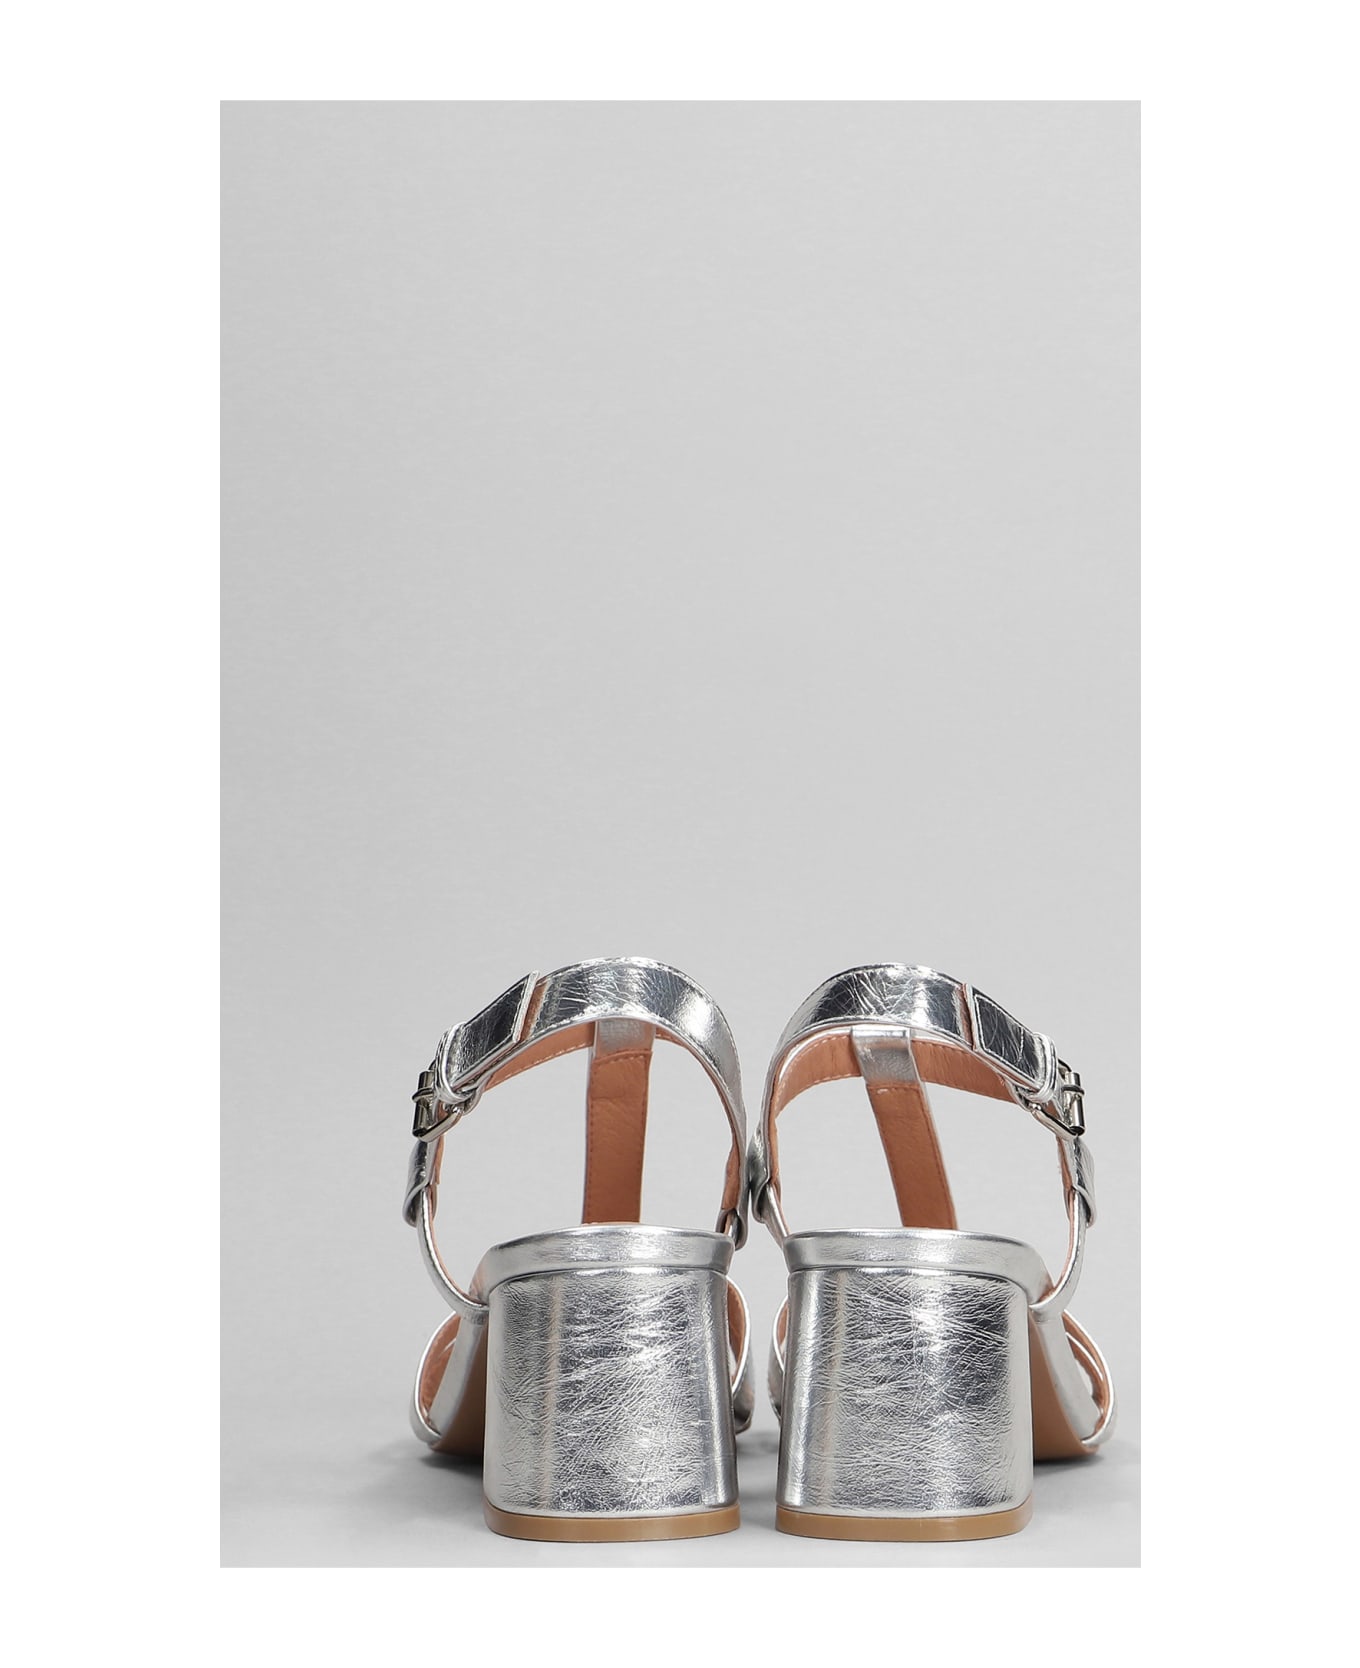 Bibi Lou Rosie Sandals In Silver Leather - silver